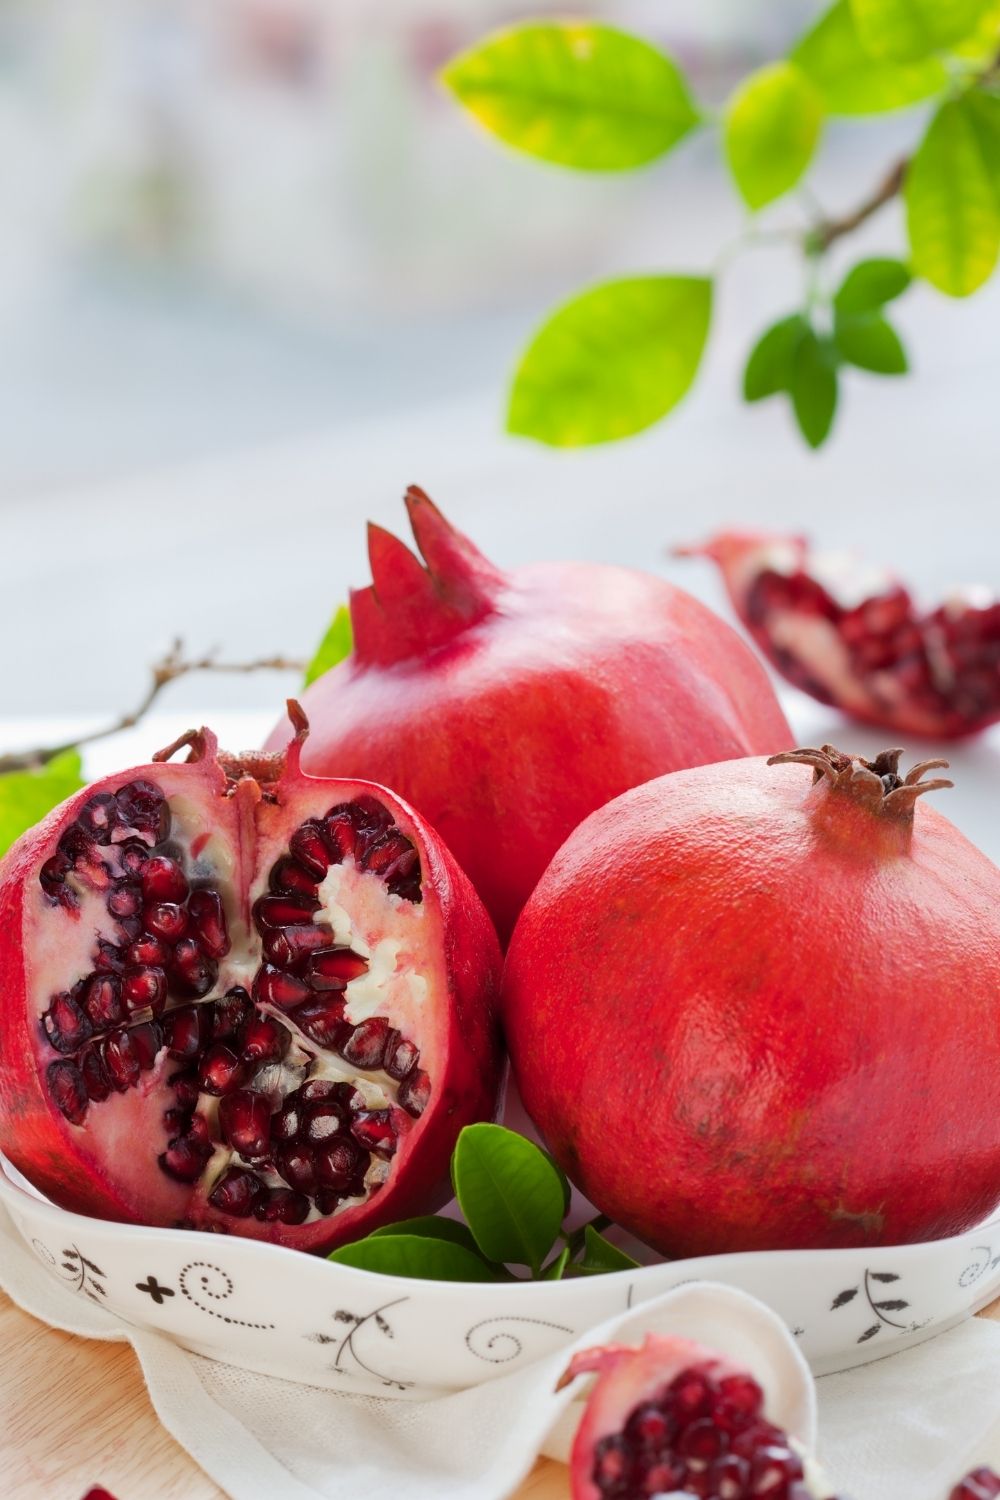 Benefits of pomegranate